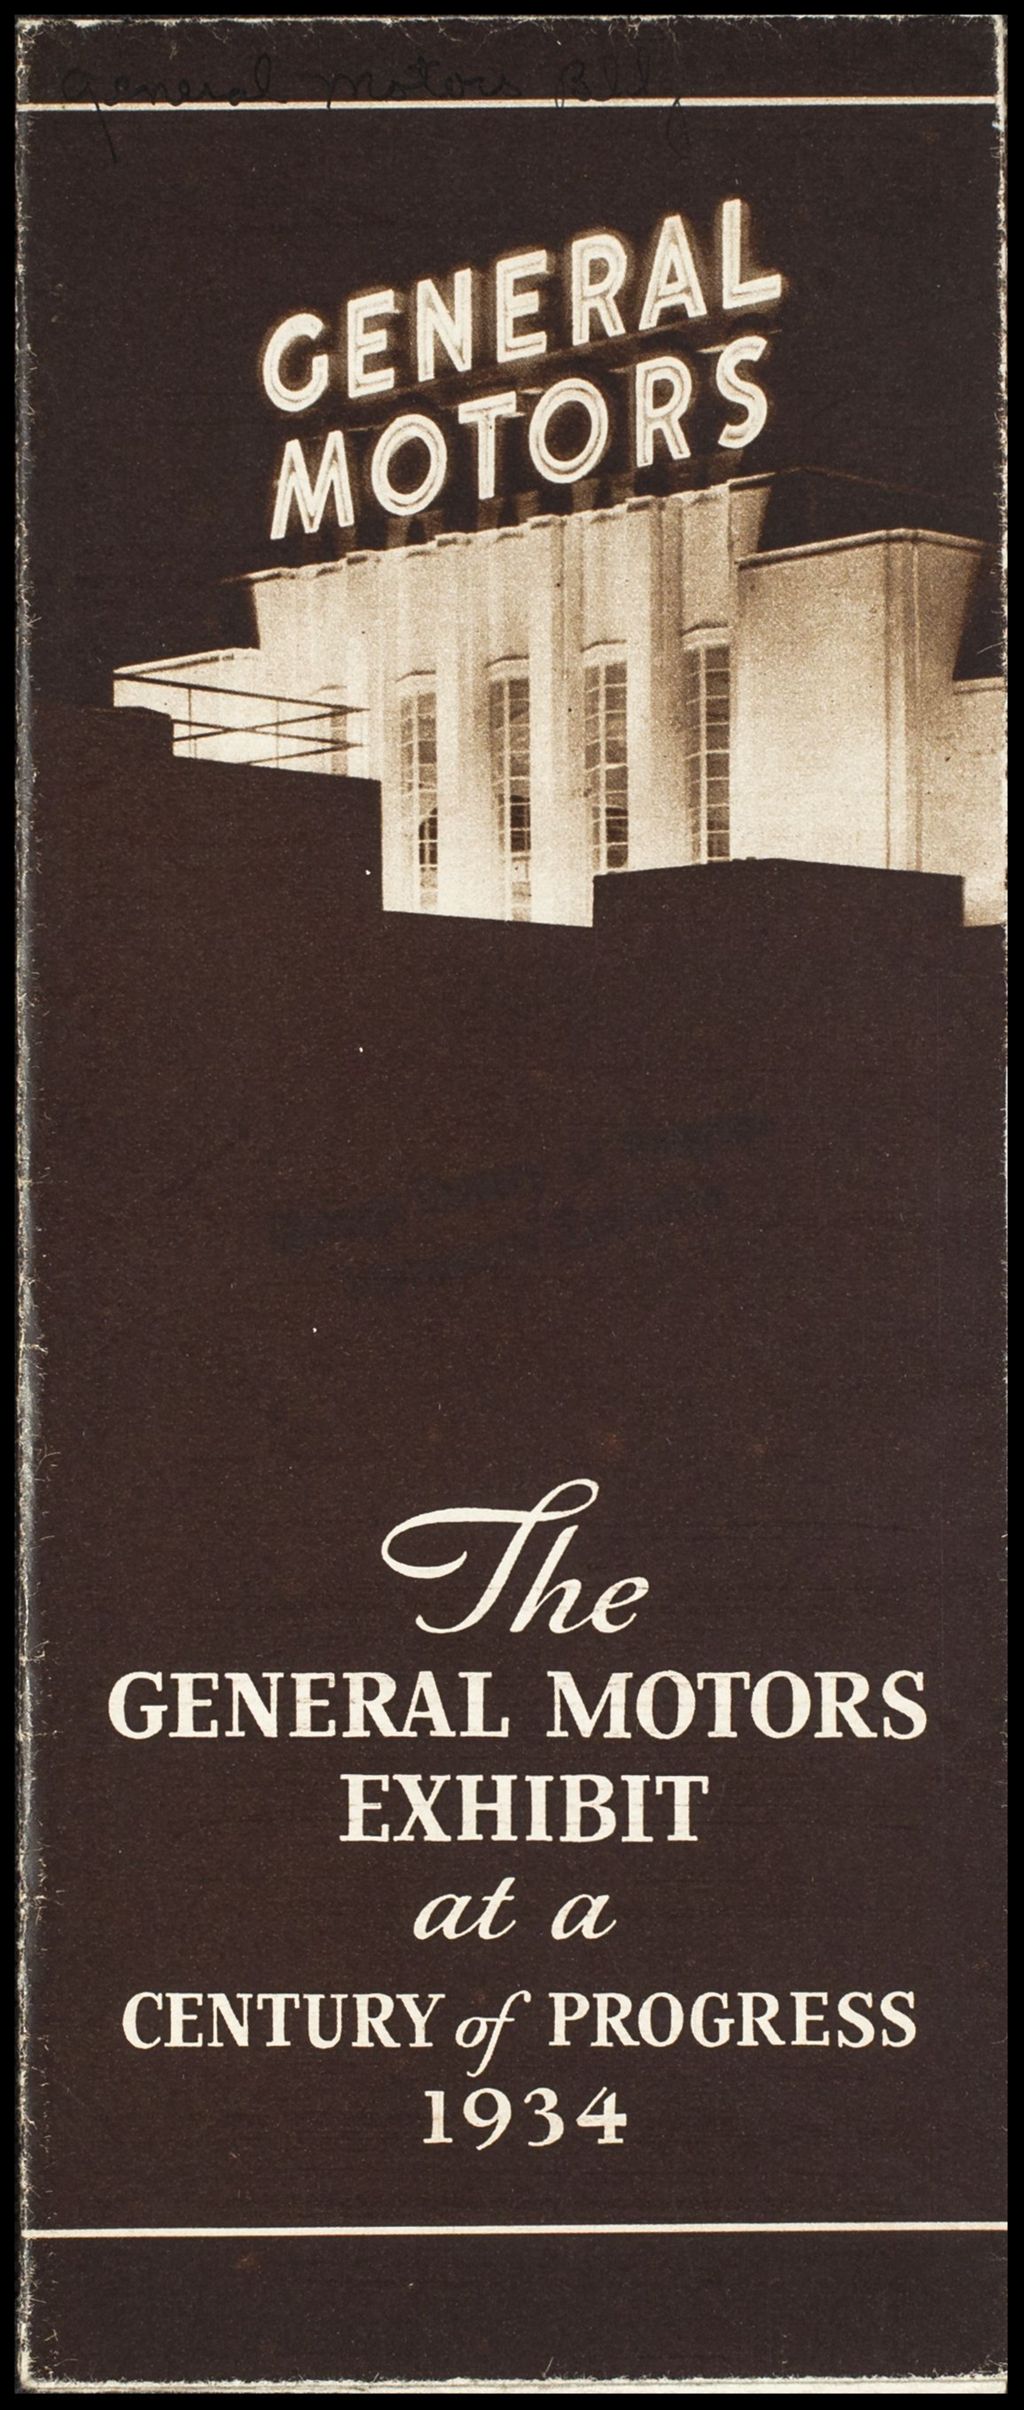 General Motors building (Folder 16-305)